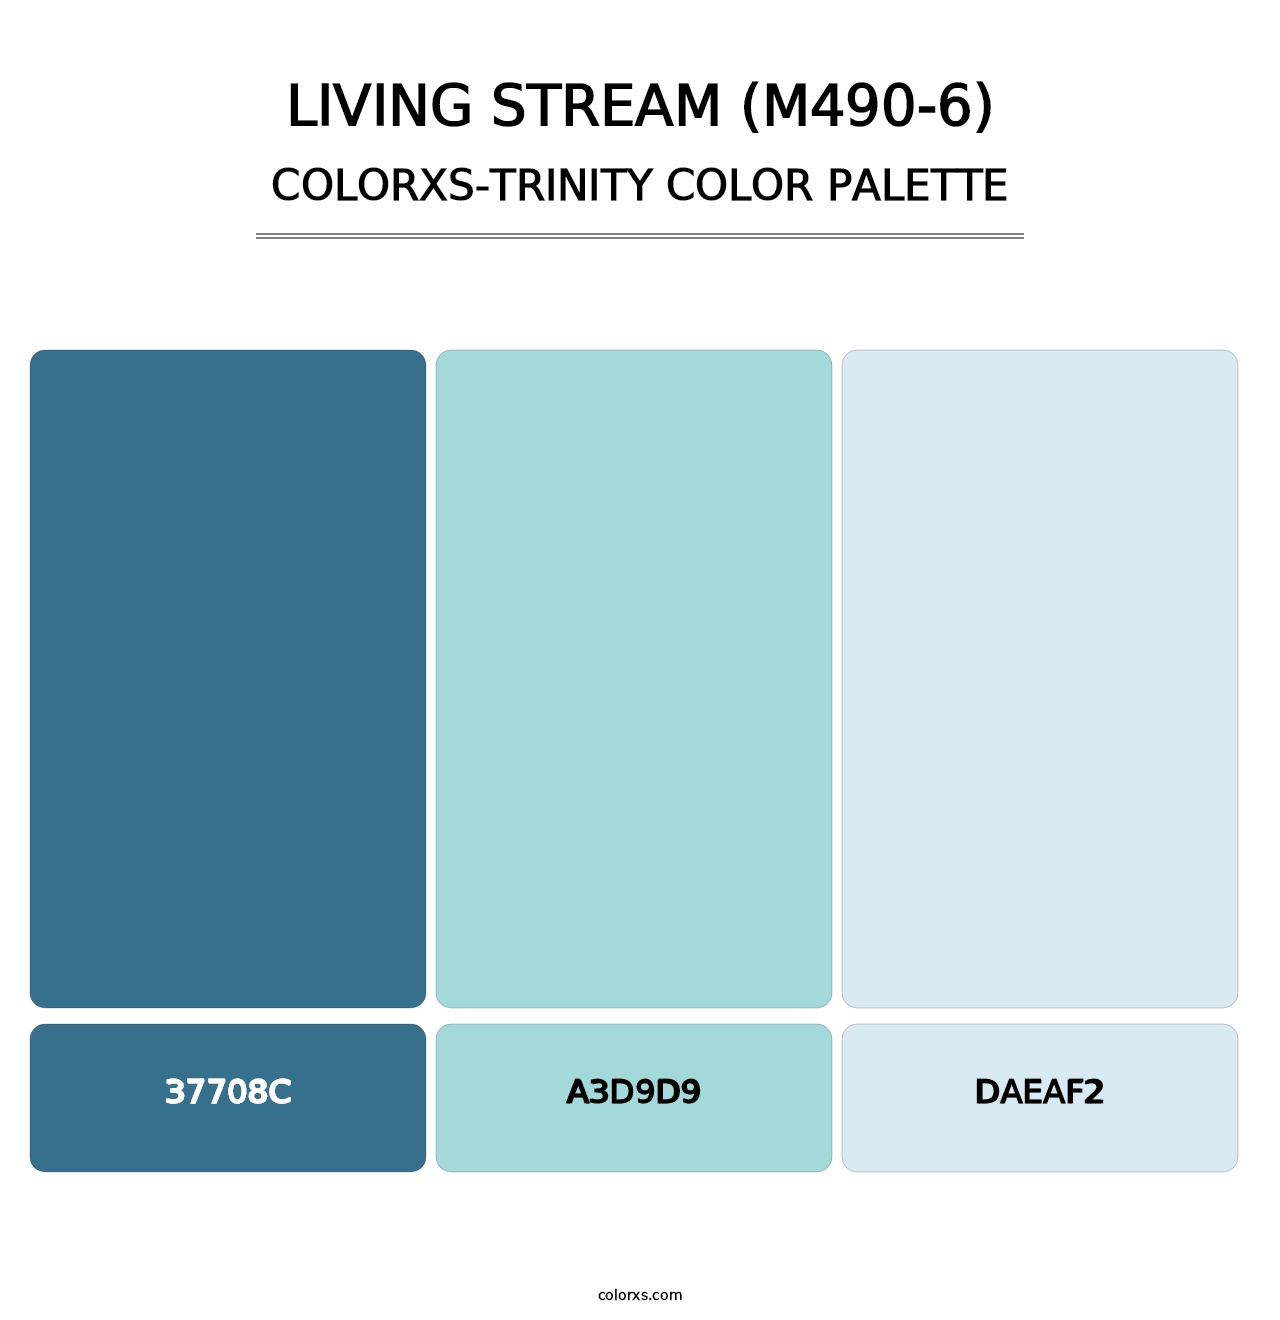 Living Stream (M490-6) - Colorxs Trinity Palette